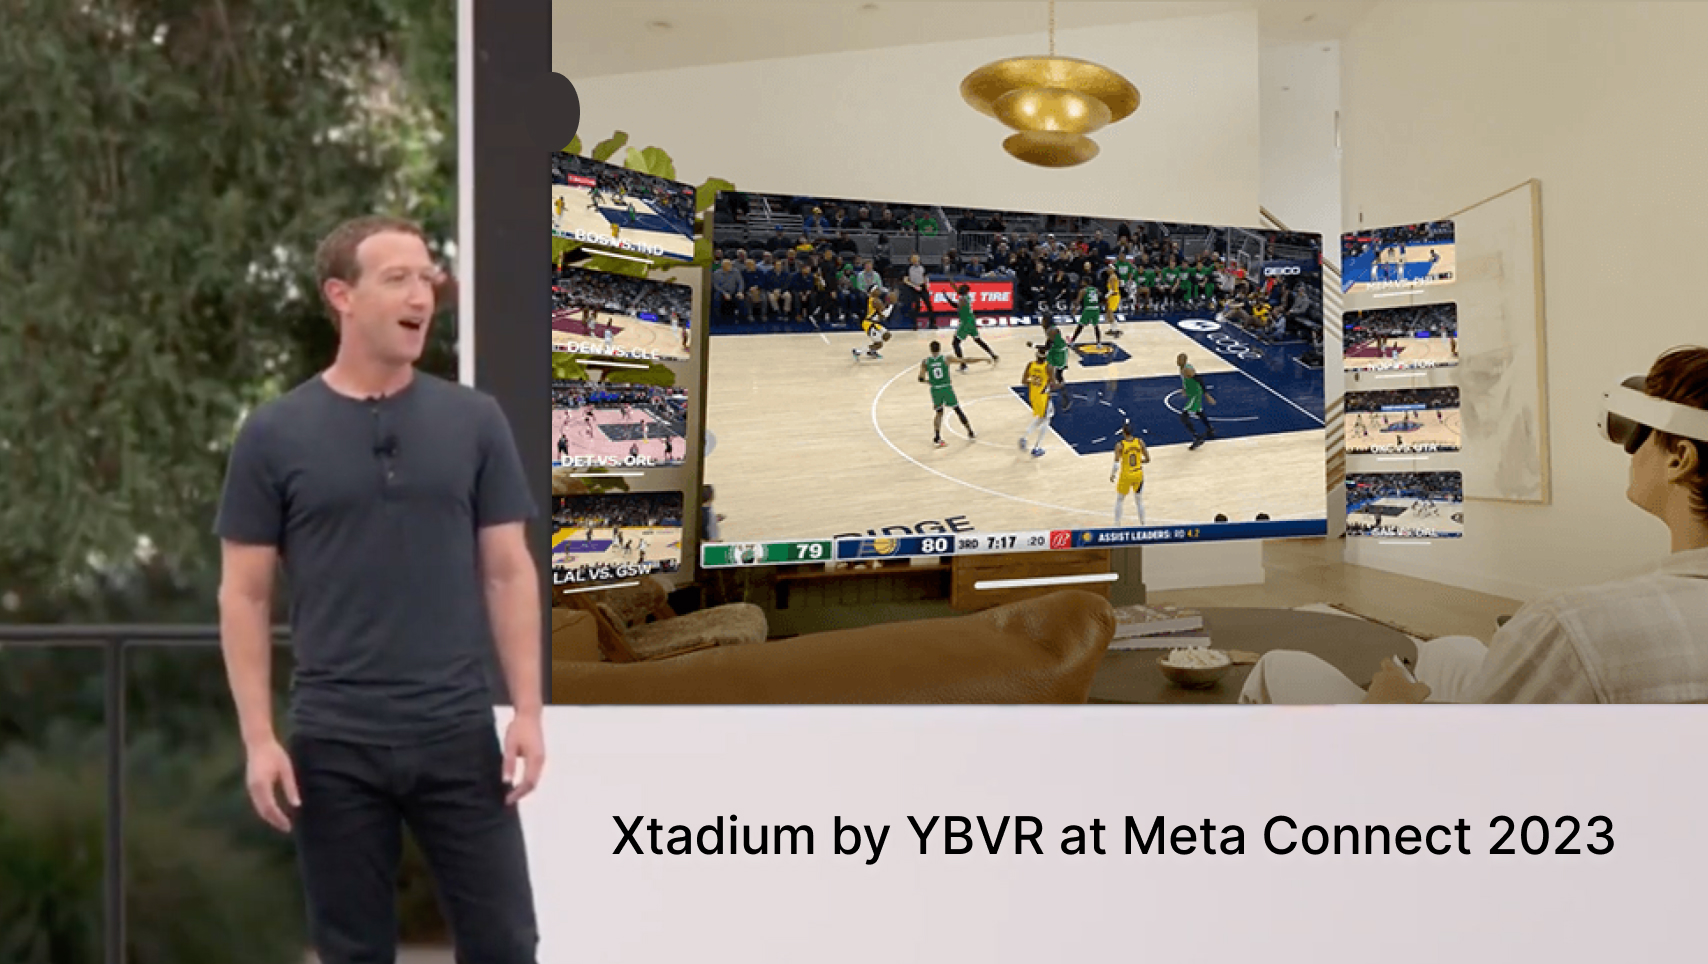 YBVR Xtadium presented at Meta Connect 2023